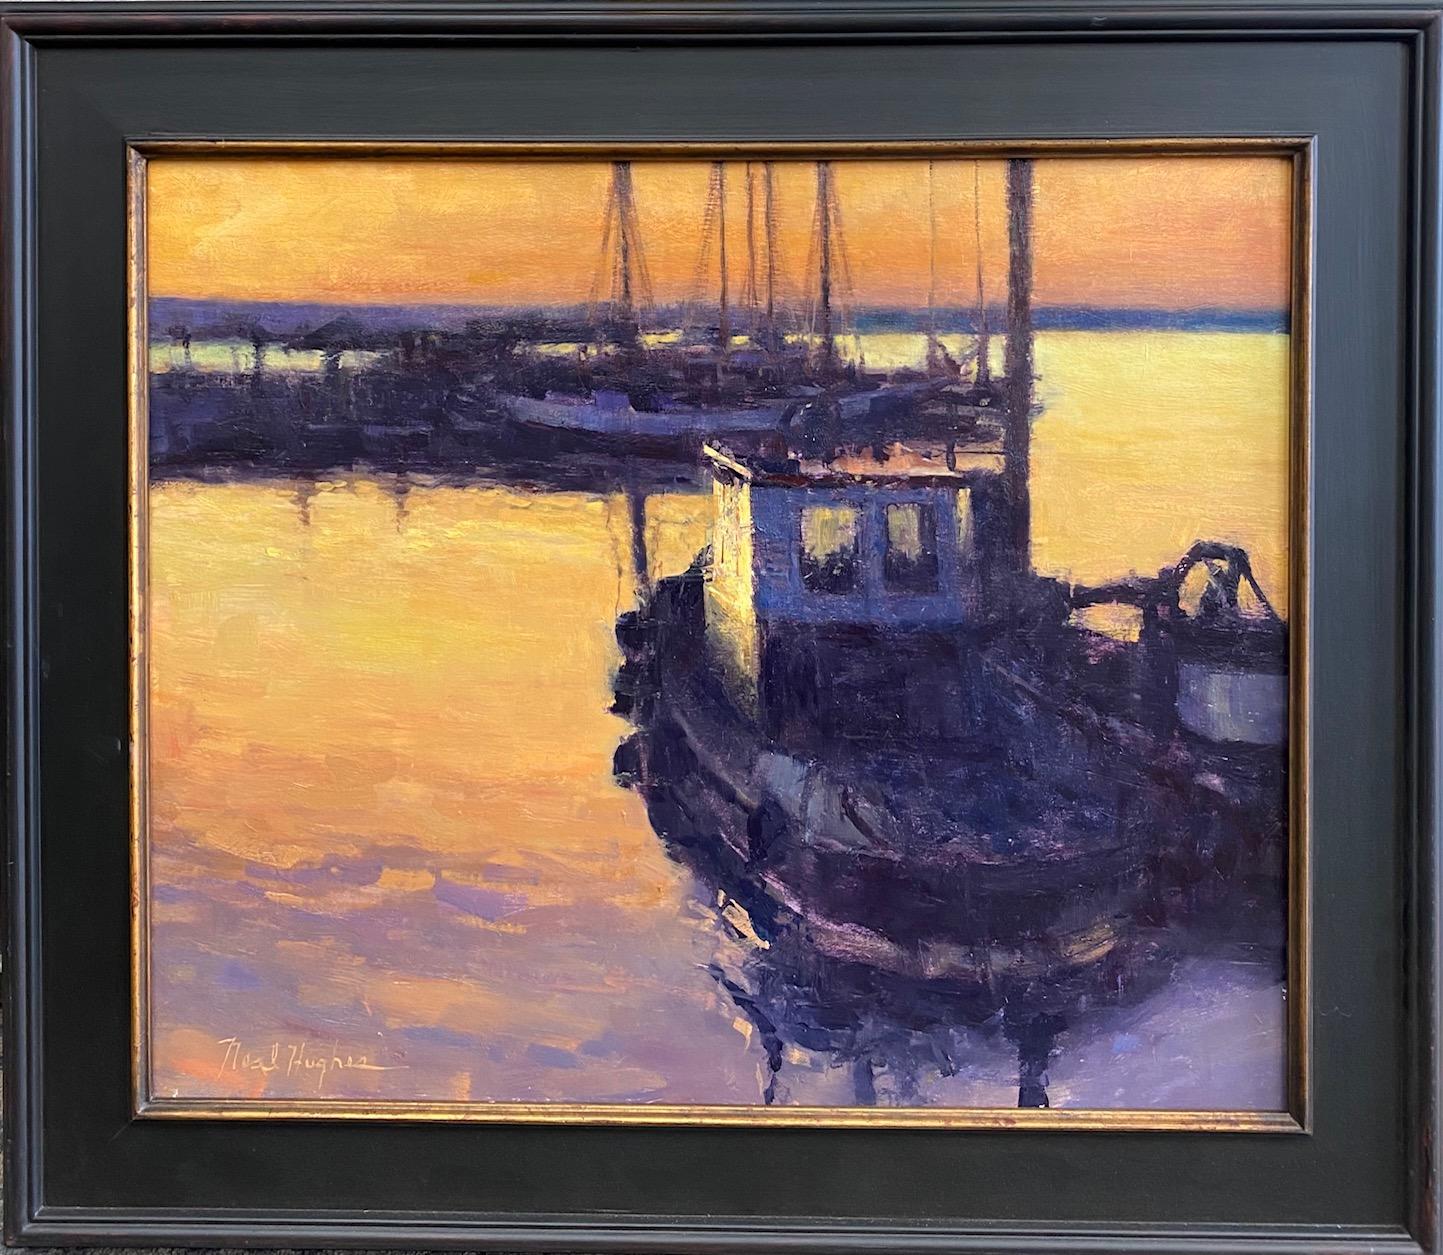 Neal Hughes Landscape Painting - Sunrise Tug, original realist impressionist nocturnal marine landscape